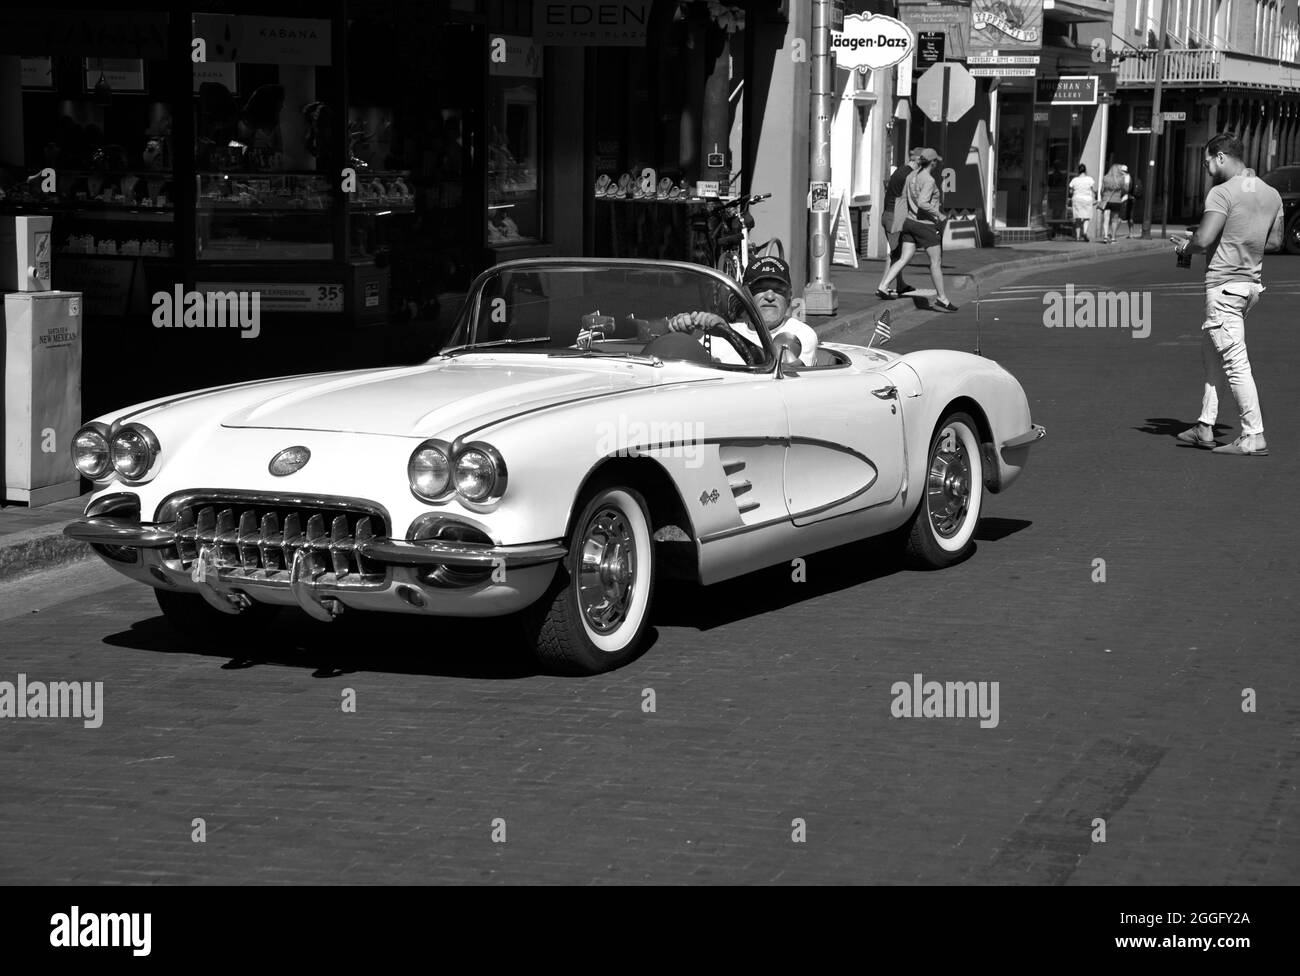 Corvette Black and White Stock Photos & Images - Alamy